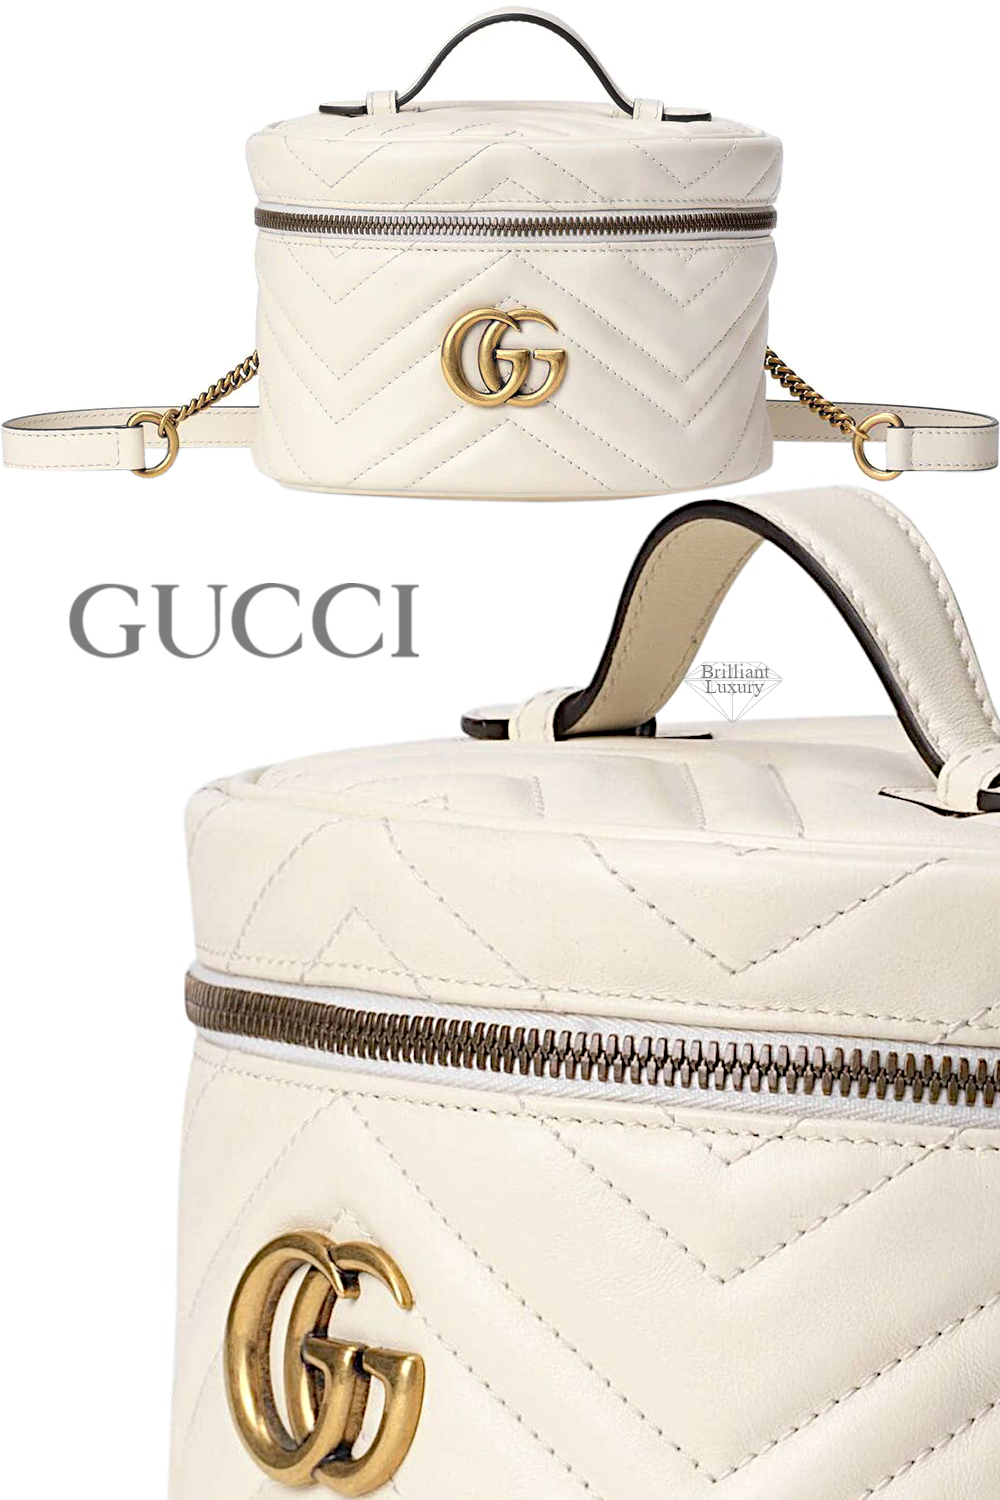 ♦Gucci GG logo case bag #gucci #bags #brilliantluxury